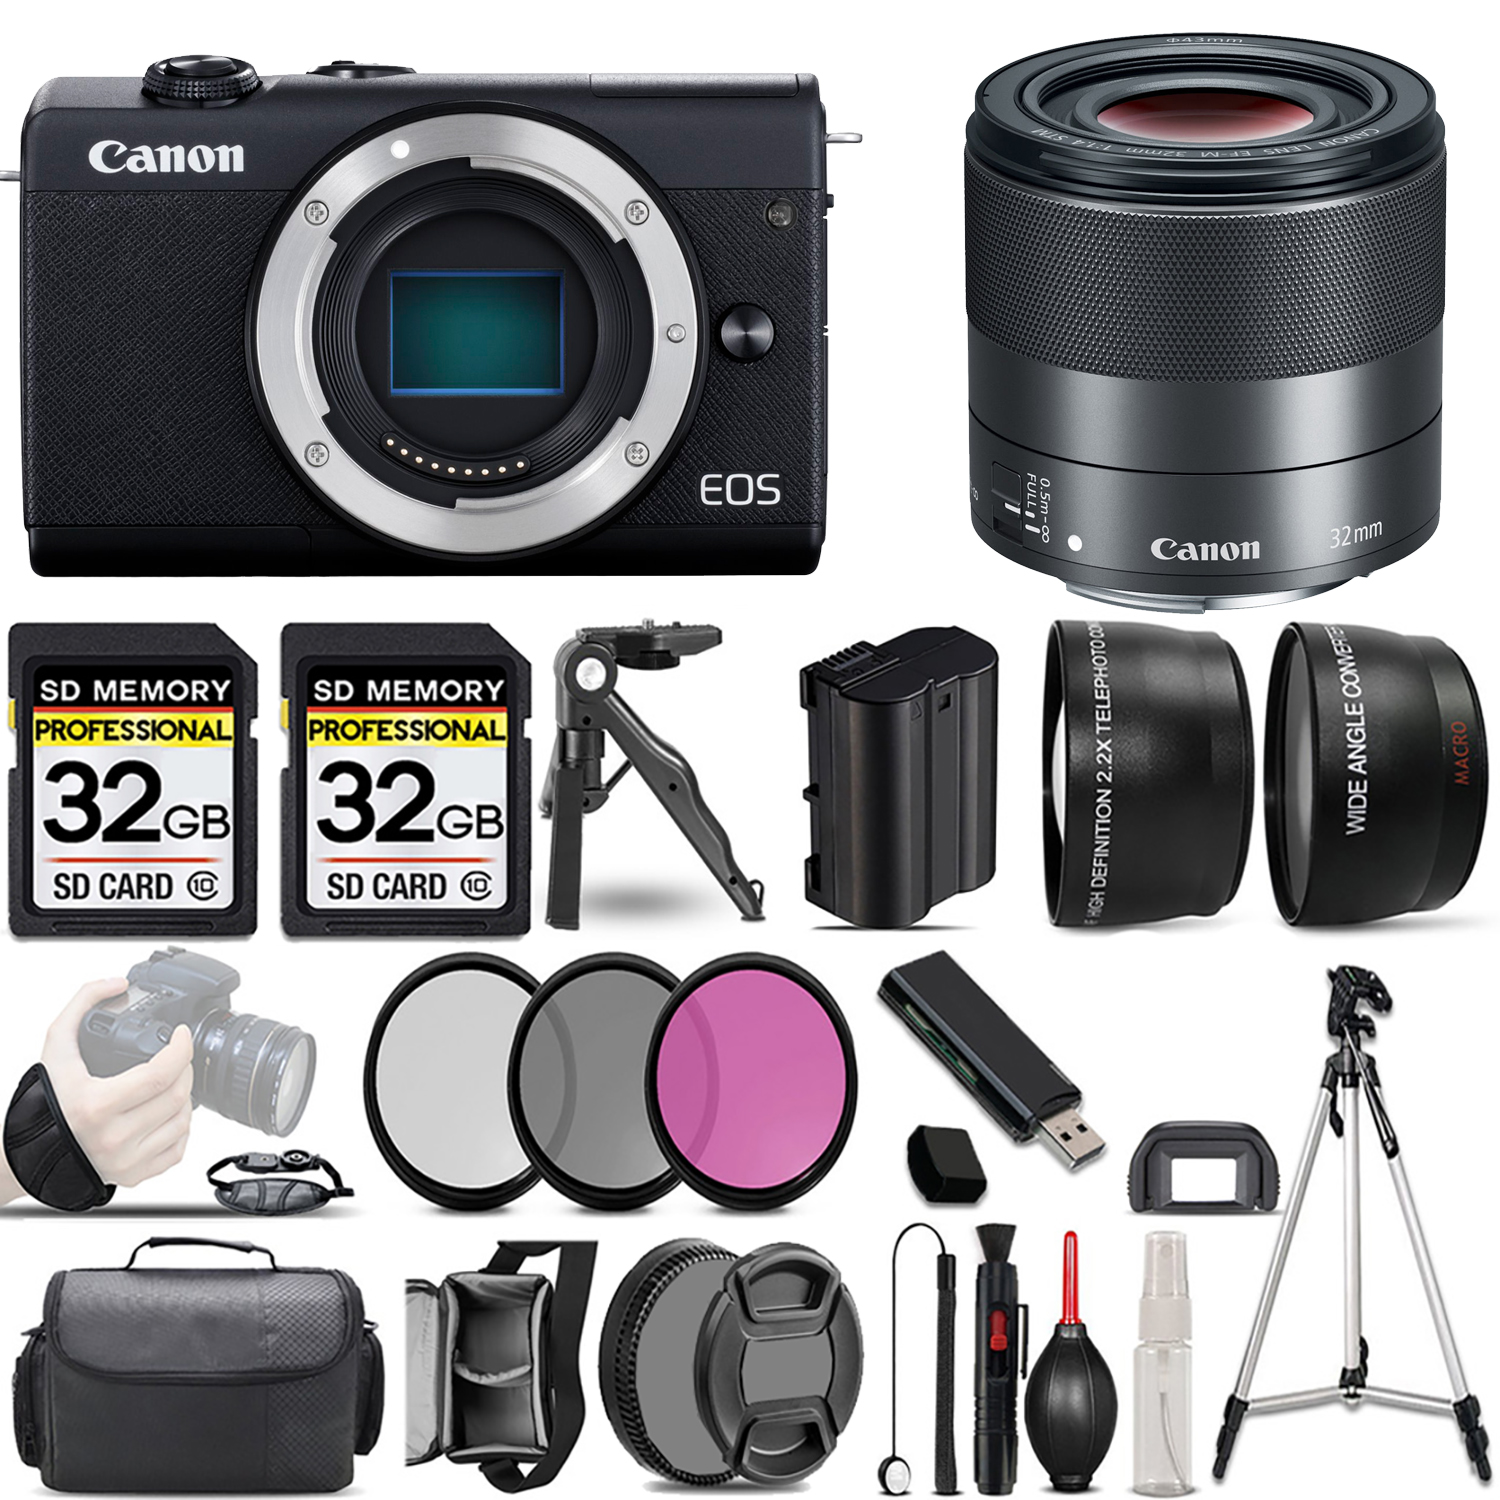 EOS M200 Camera (Black) +32mm f/1.4 STM Lens +3 PC Filter +64GB *FREE SHIPPING*